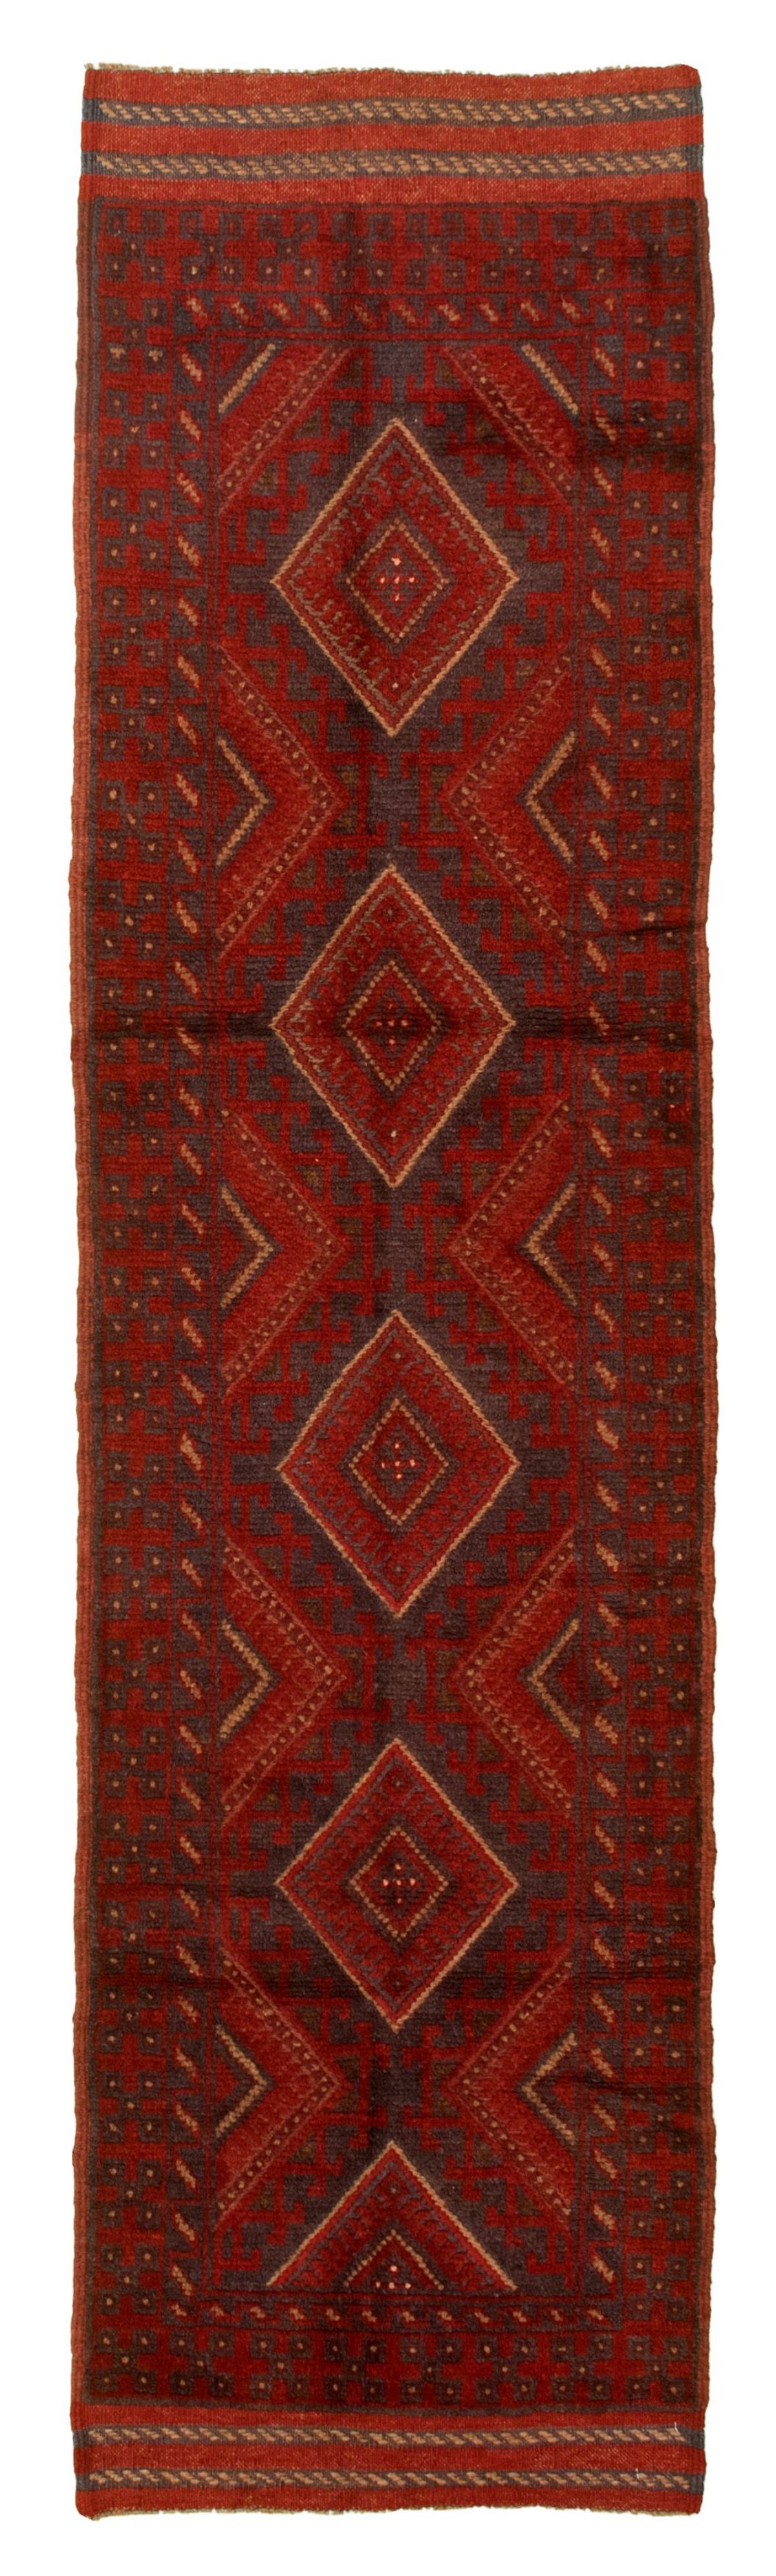 Hand-knotted Tajik Caucasian Red Wool Rug 2'2" x 8'3"  Size: 2'2" x 8'3"  